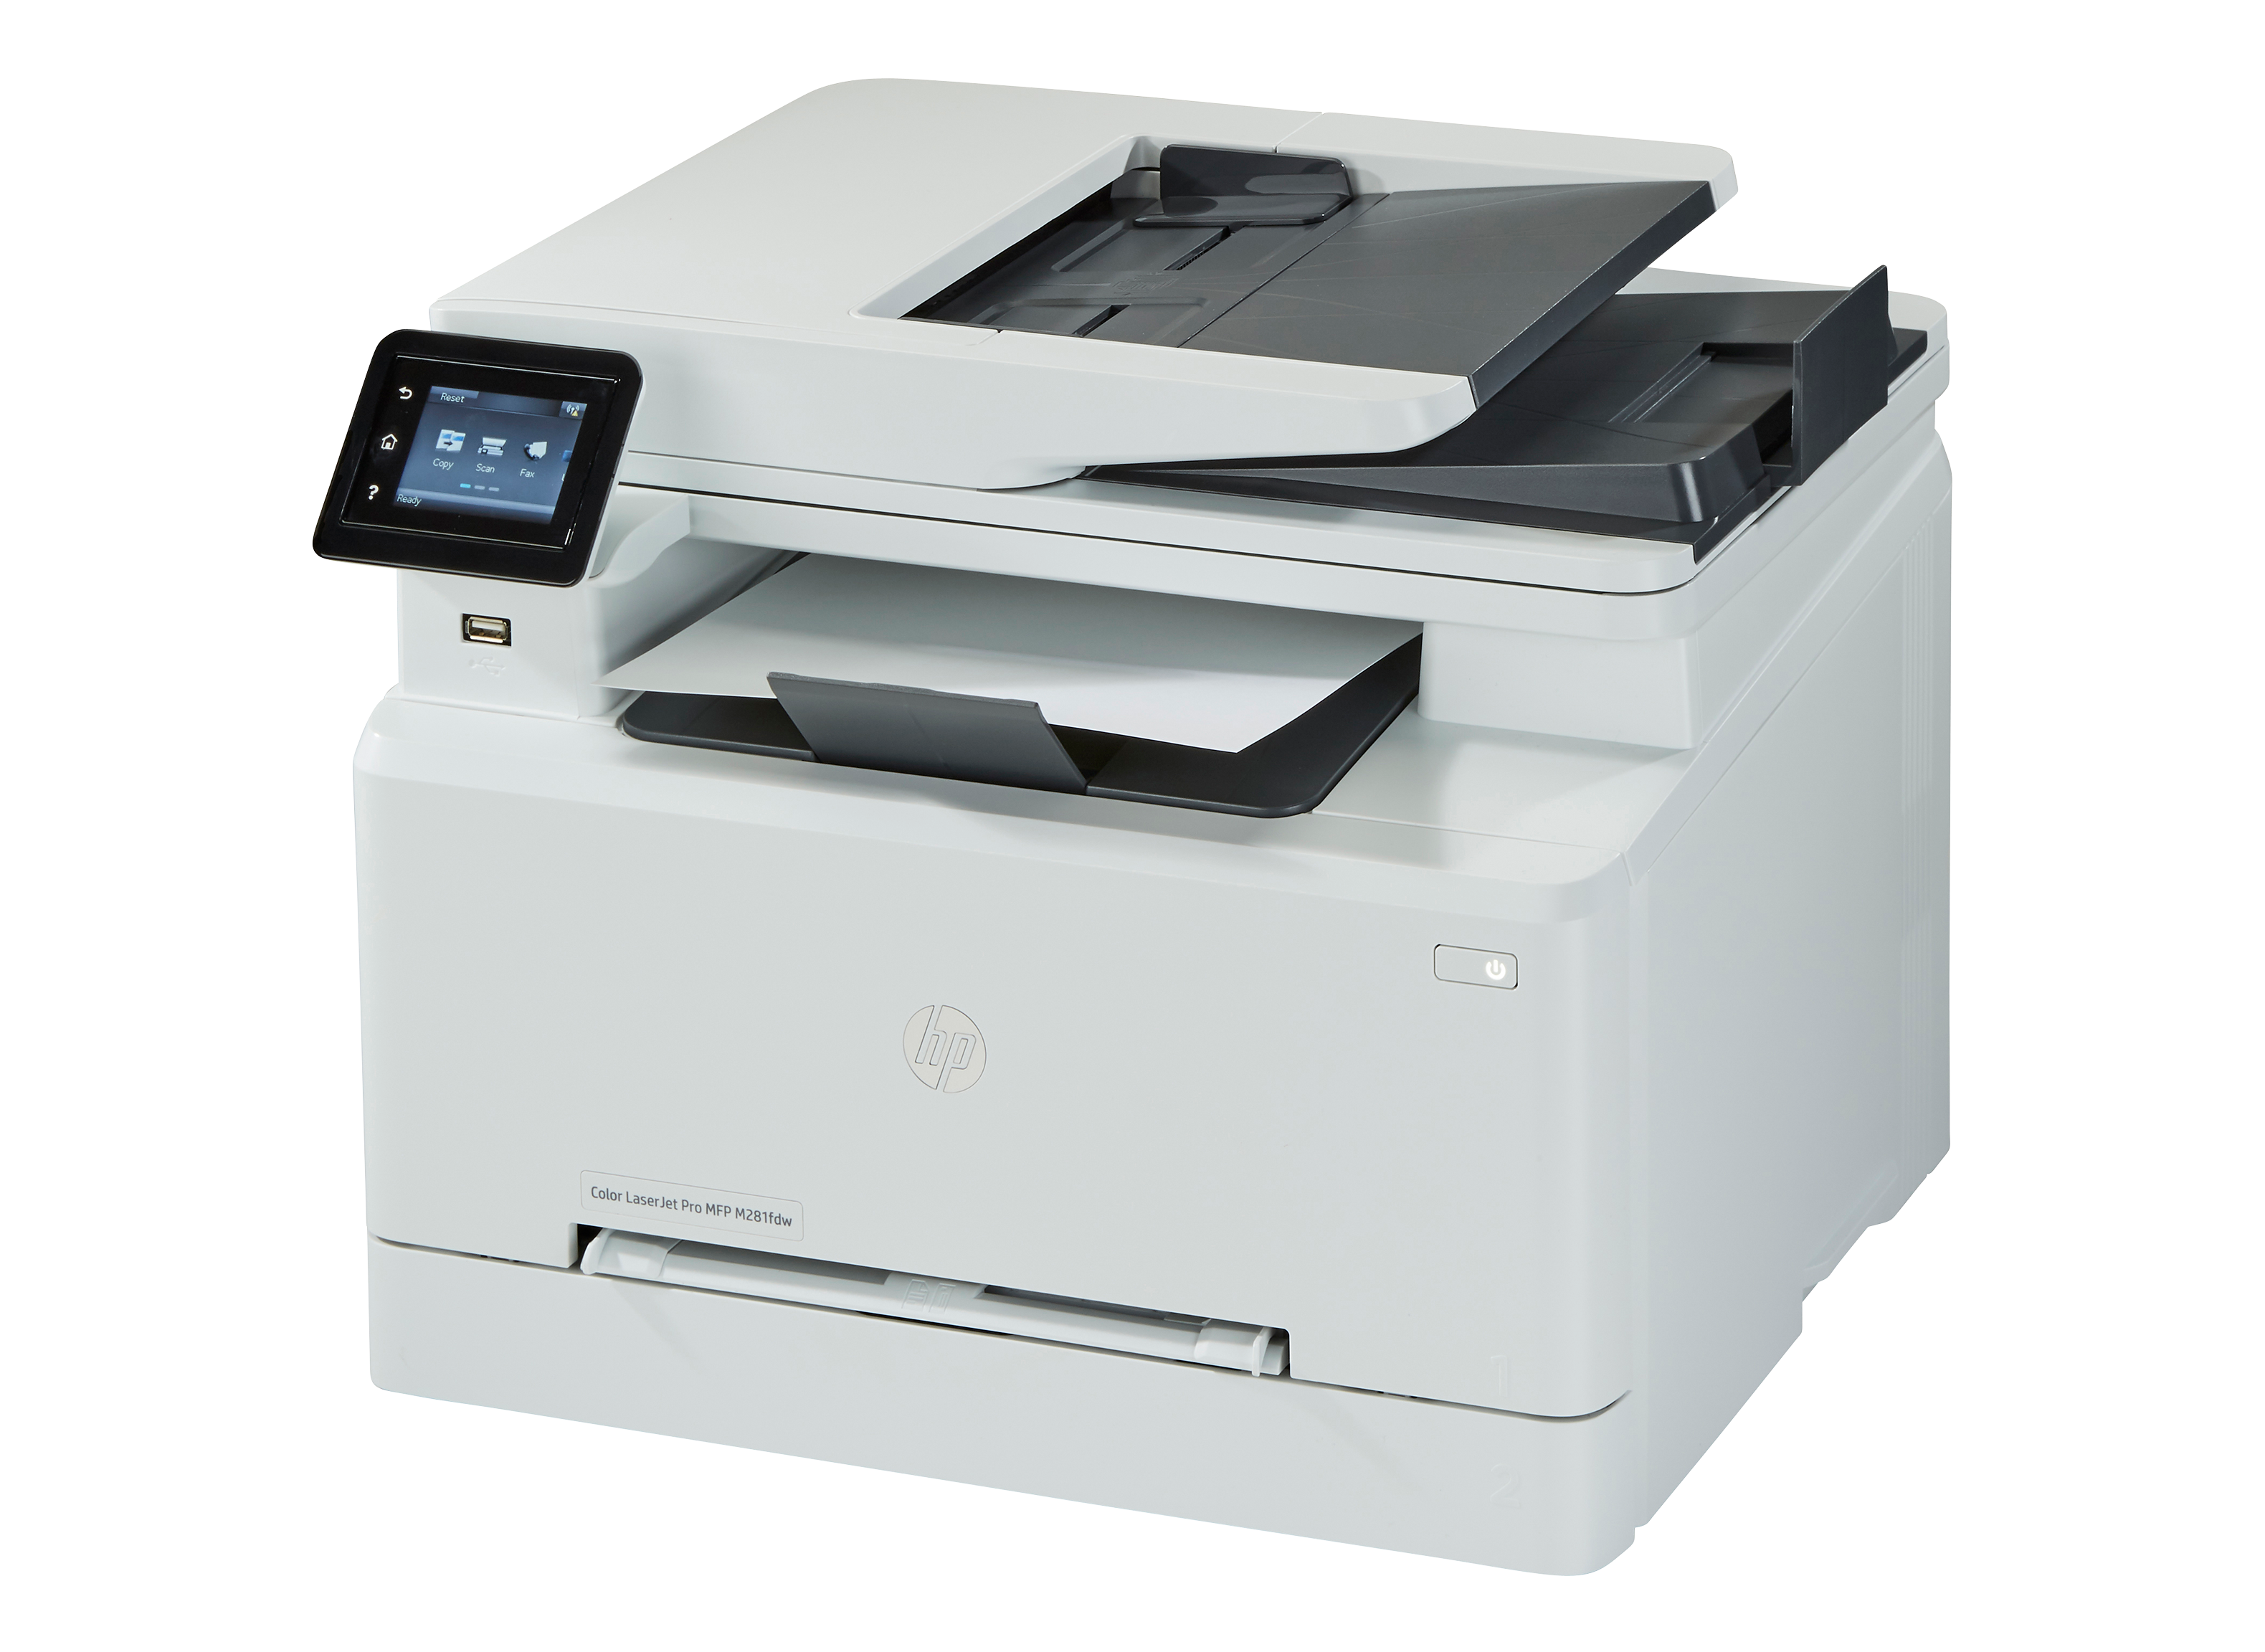 insulator marmorering manipulere HP Color LaserJet Pro MFP M281fdw Printer Review - Consumer Reports